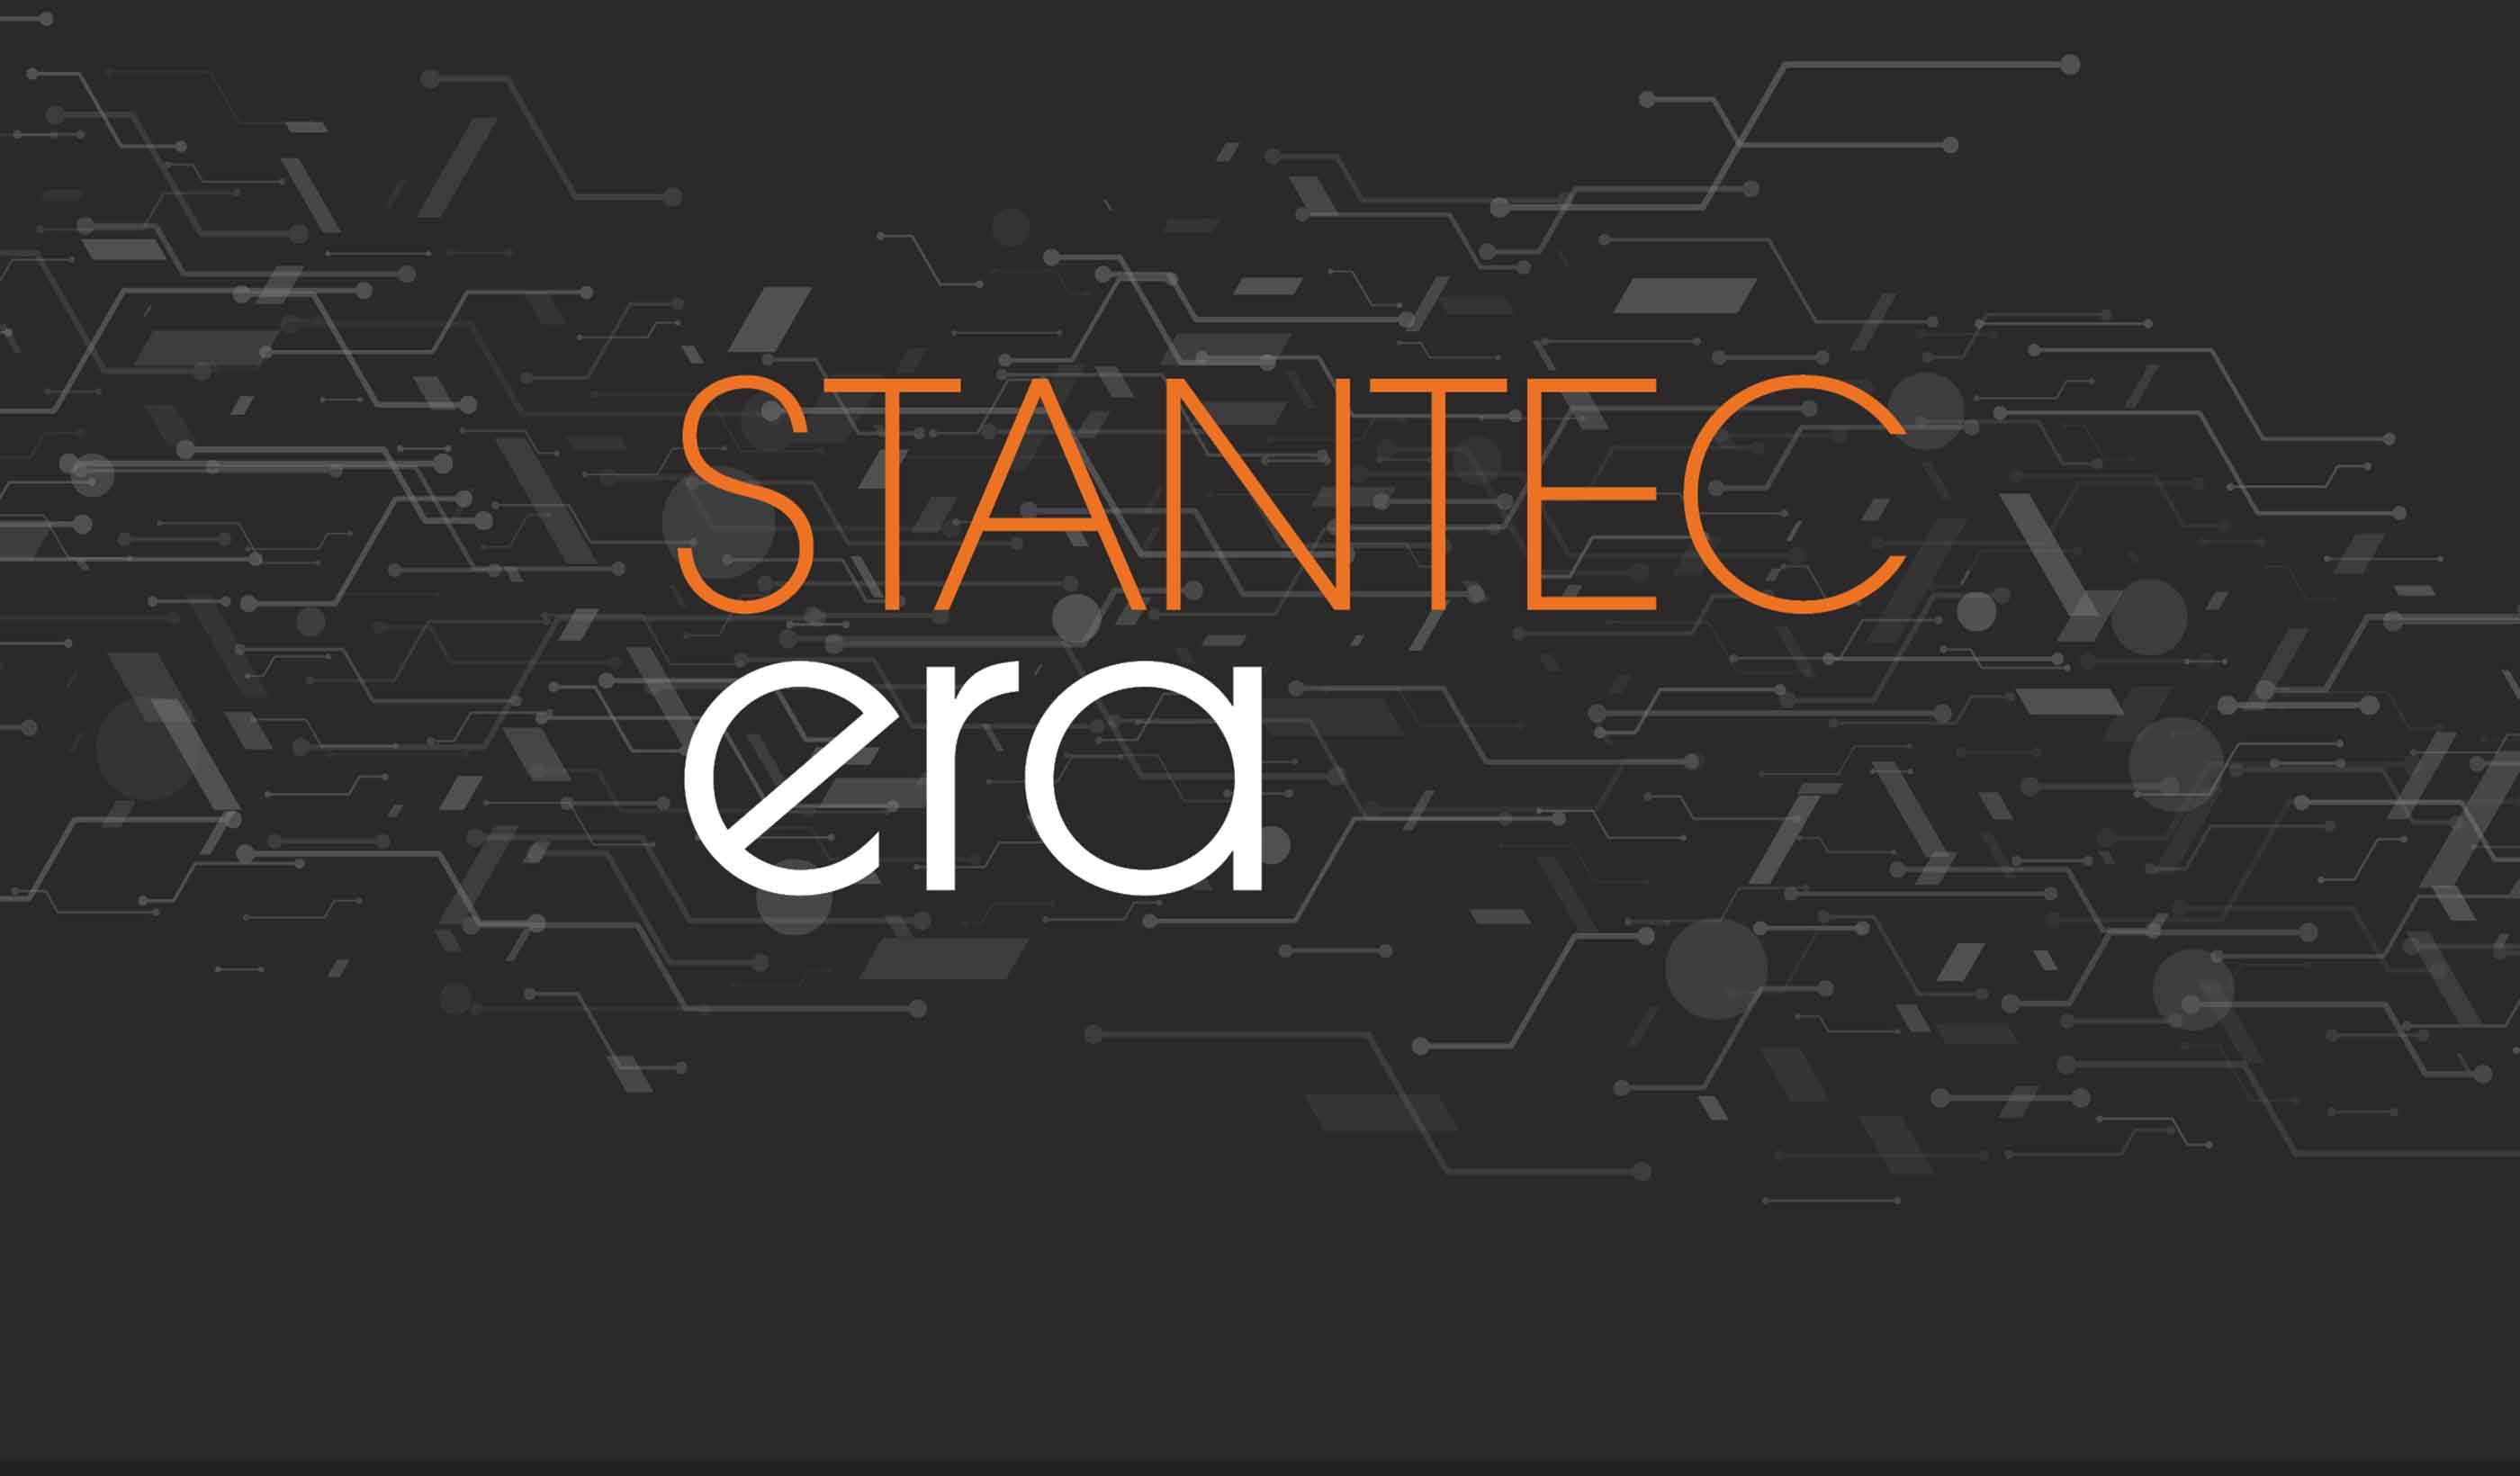 Stantec ERA Issue 02 | The Digital Issue